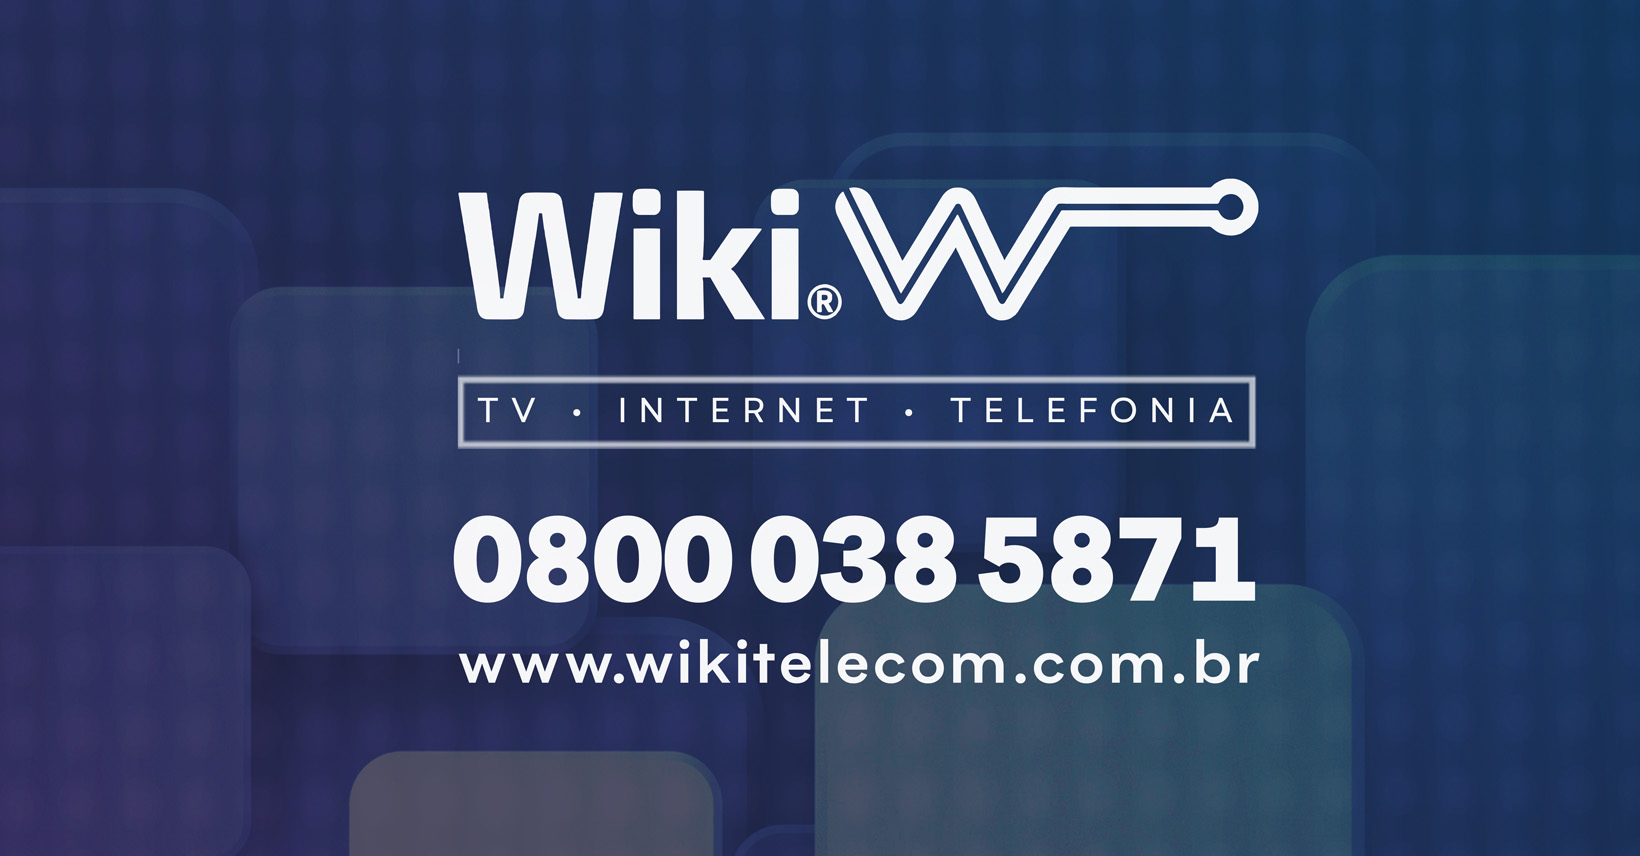 www.wikitelecom.com.br